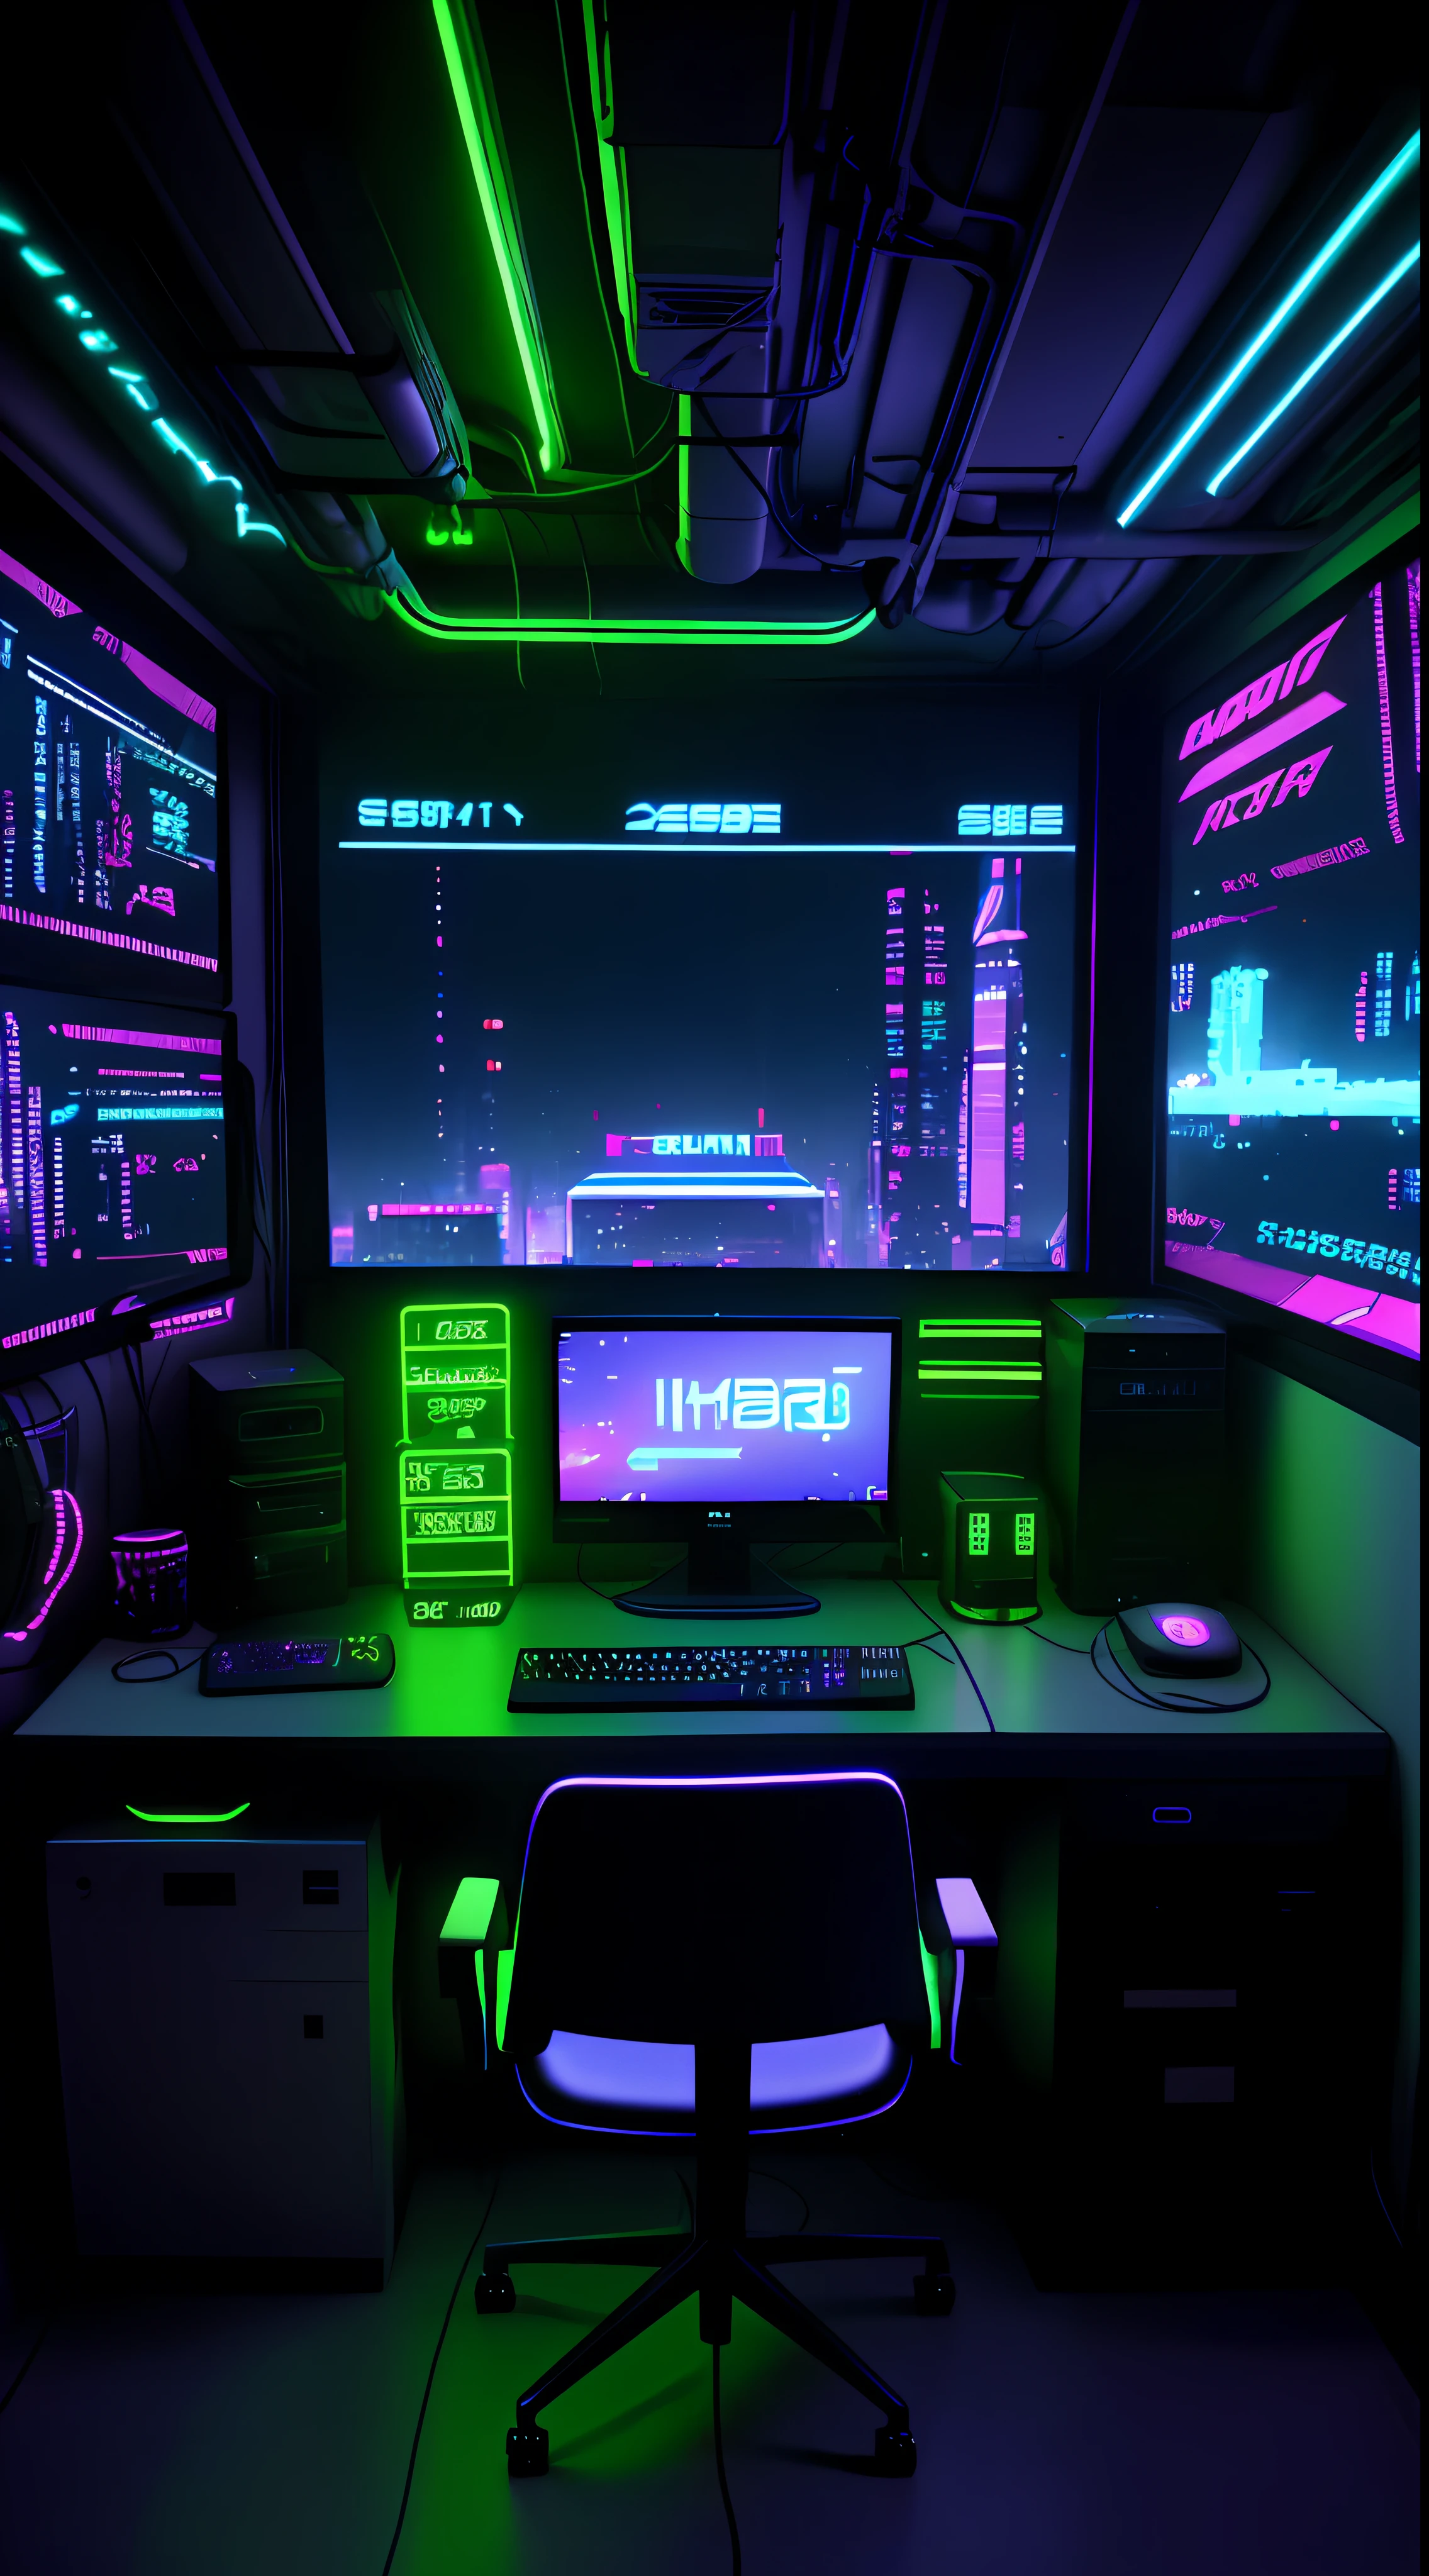 un escritorio de computadora con poca luz, varios monitores y un teclado, entorno ciberpunk, cyber punk setting, iluminación de neón cibernético, ciberespacio, cyberpunk con luces de neón, luces de neón cibernéticas, en una habitación temática cyberpunk, interior ciberpunk, Pantalla de jugador en escritorio metálico., estética cibernética, estilo cibernético, computadora de ciencia ficción, fondo cibernético, instalación cibernética, consola y computadora